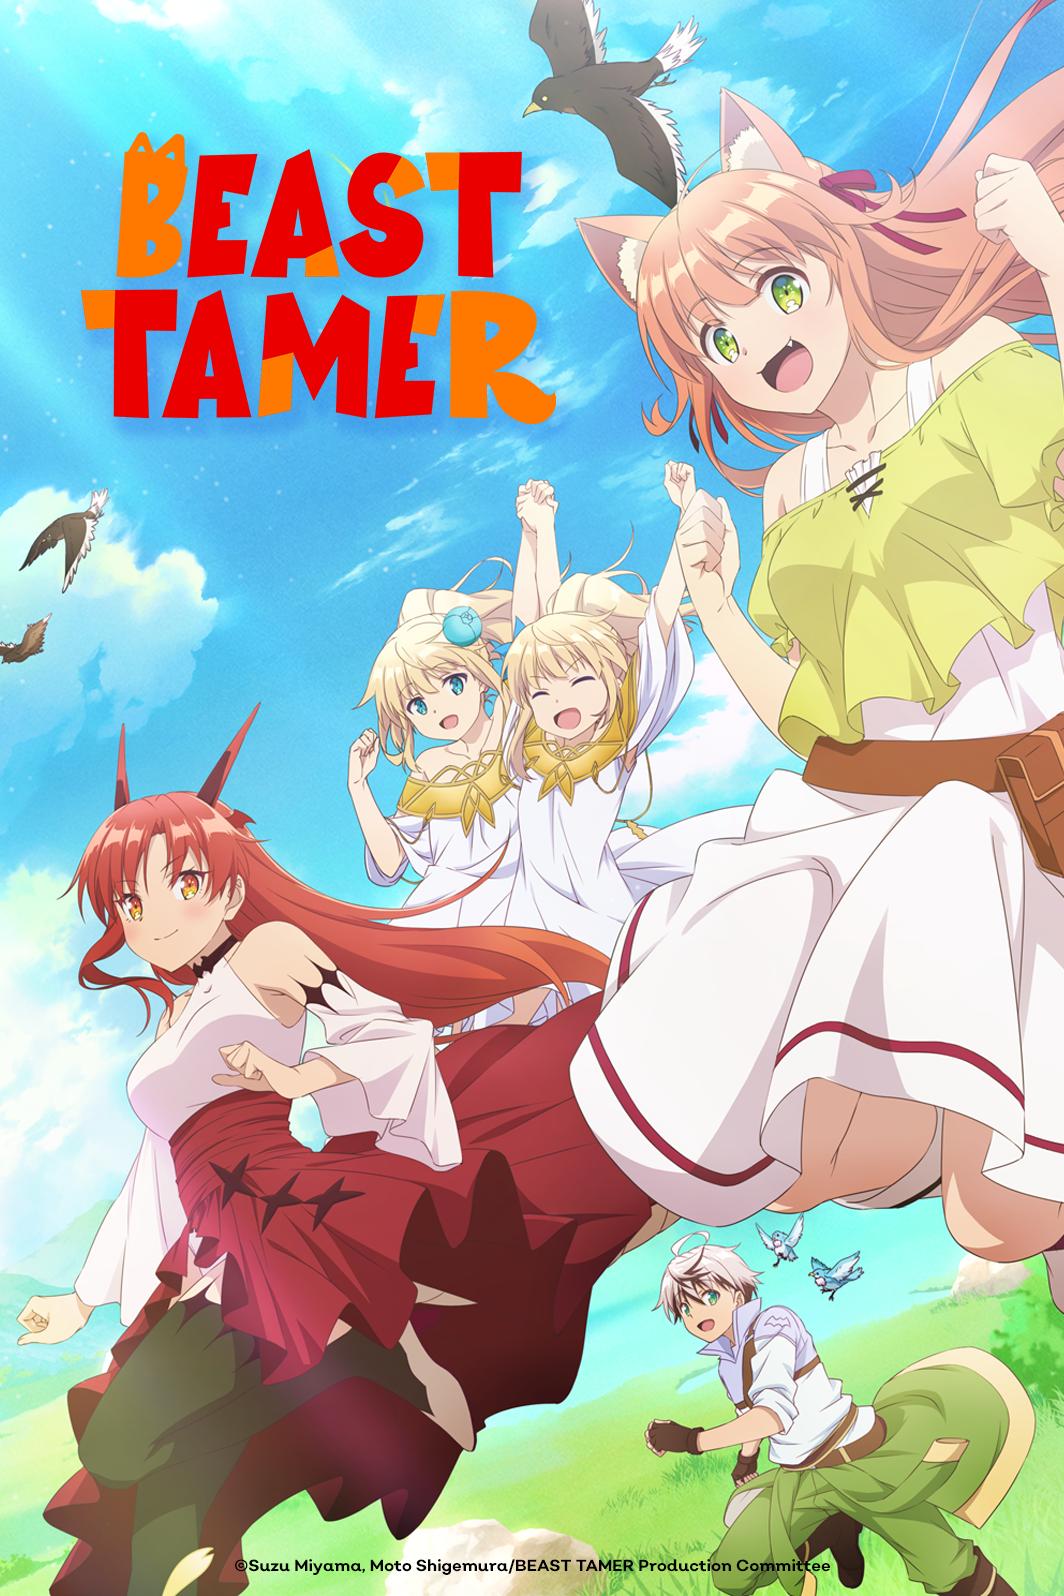 TV ratings for Beast Tamer (勇者パーティーを追放されたビーストテイマー、最強種の猫耳少女と出会う) in Japan. Tokyo MX TV series